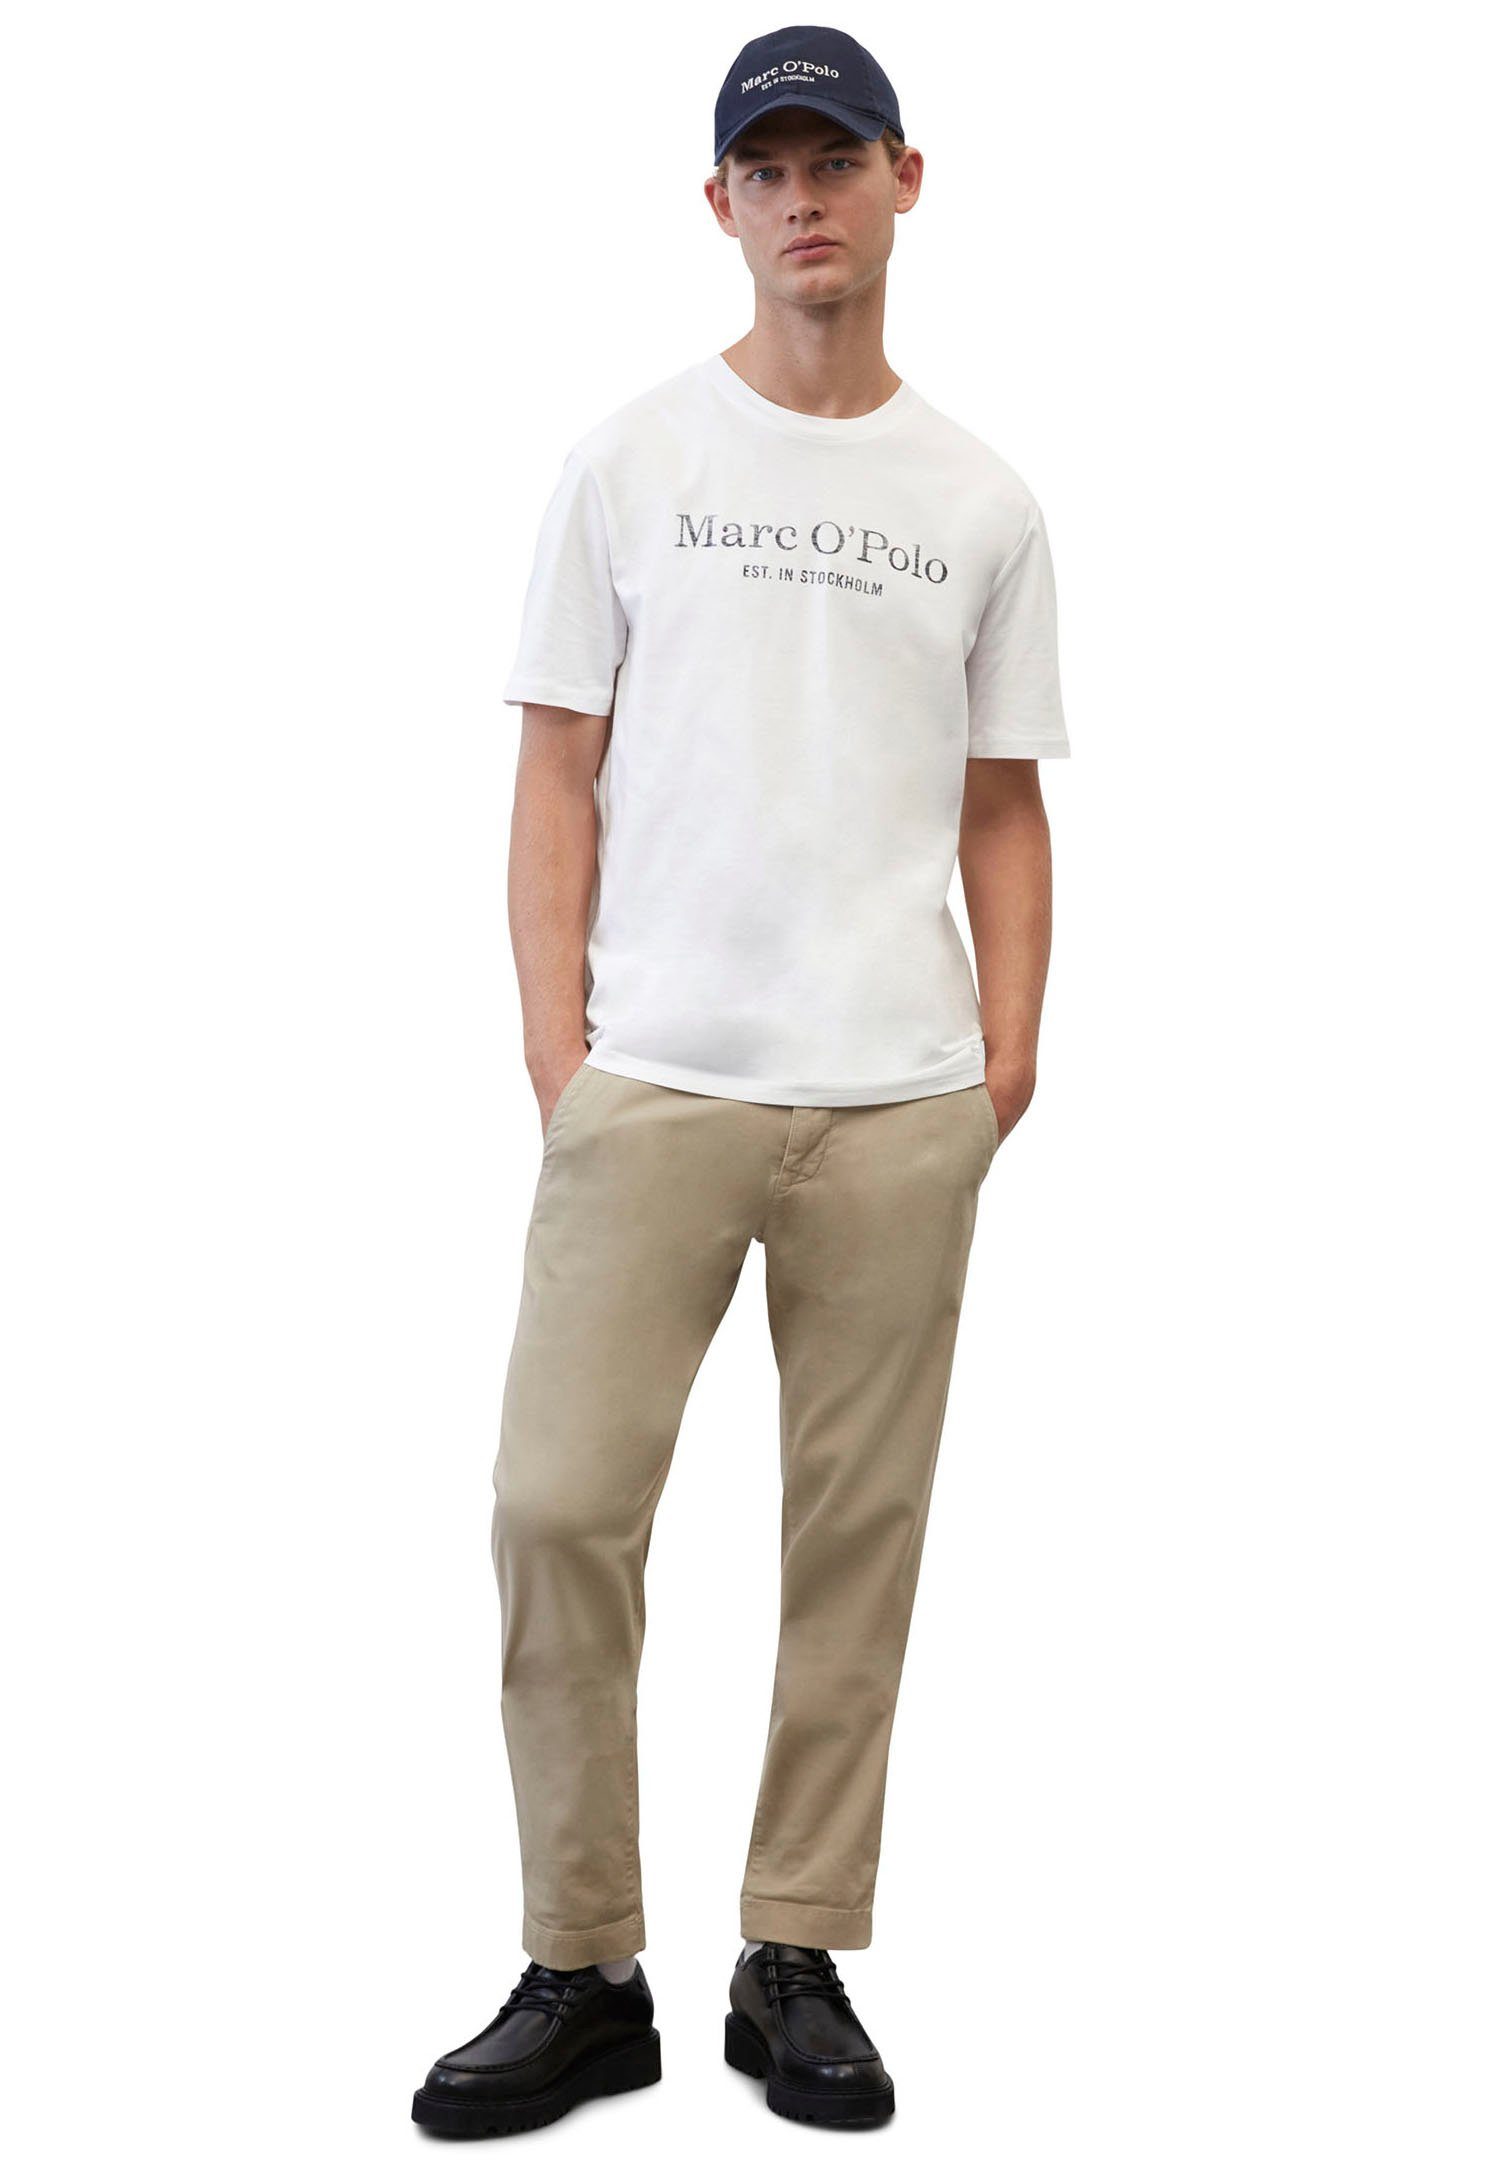 Marc O'Polo T-Shirt klassisches Logo-T-Shirt weiß